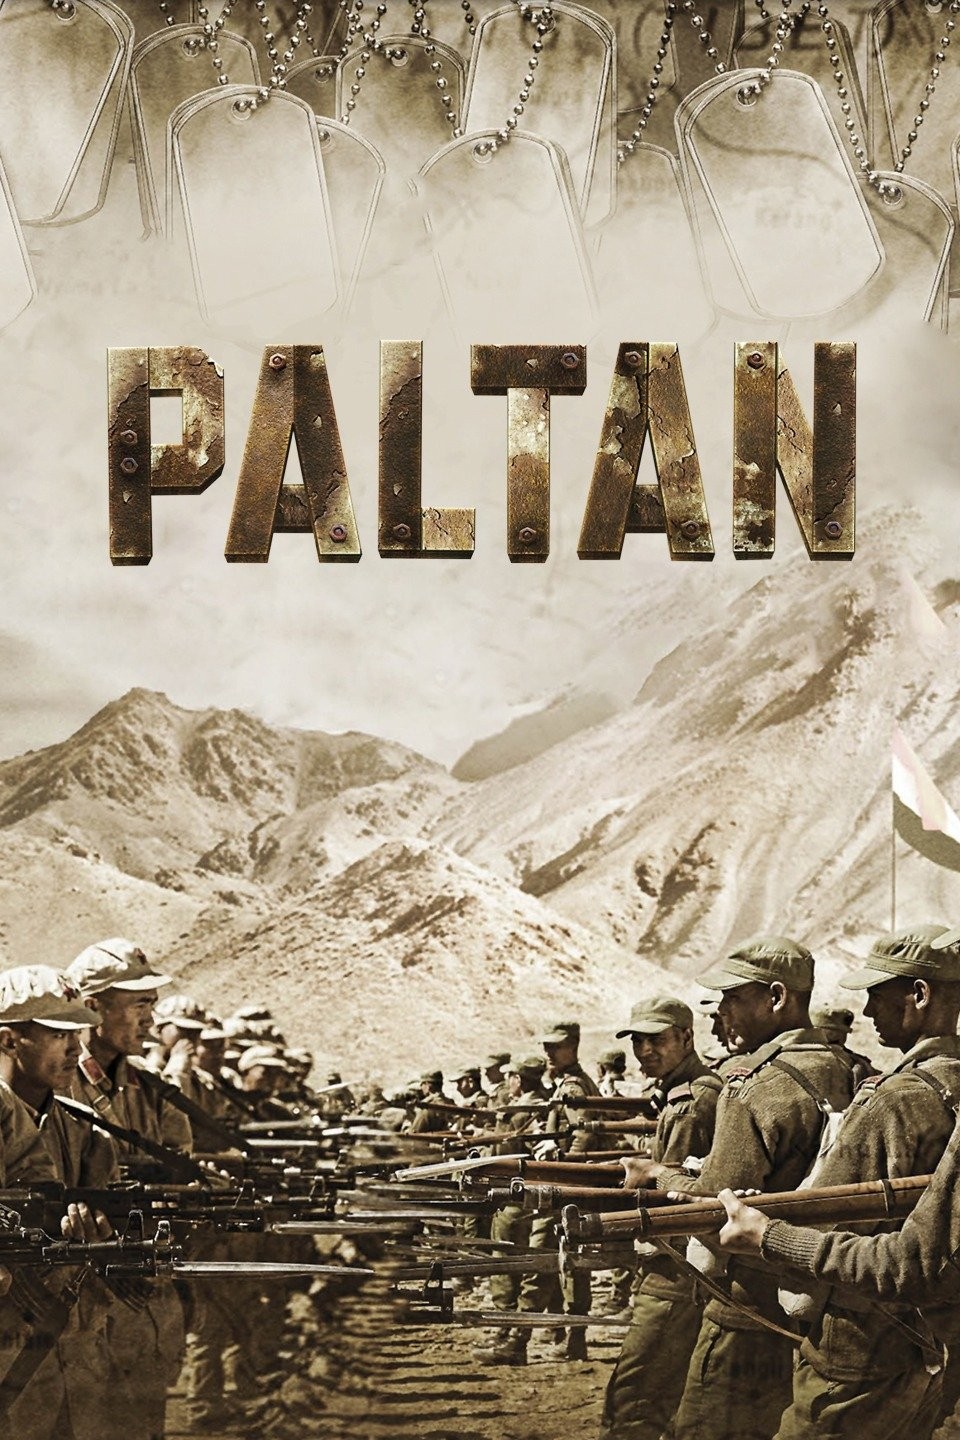 World Of Titan (Paltan Bazar) - Watch Store in Paltan Bazaar